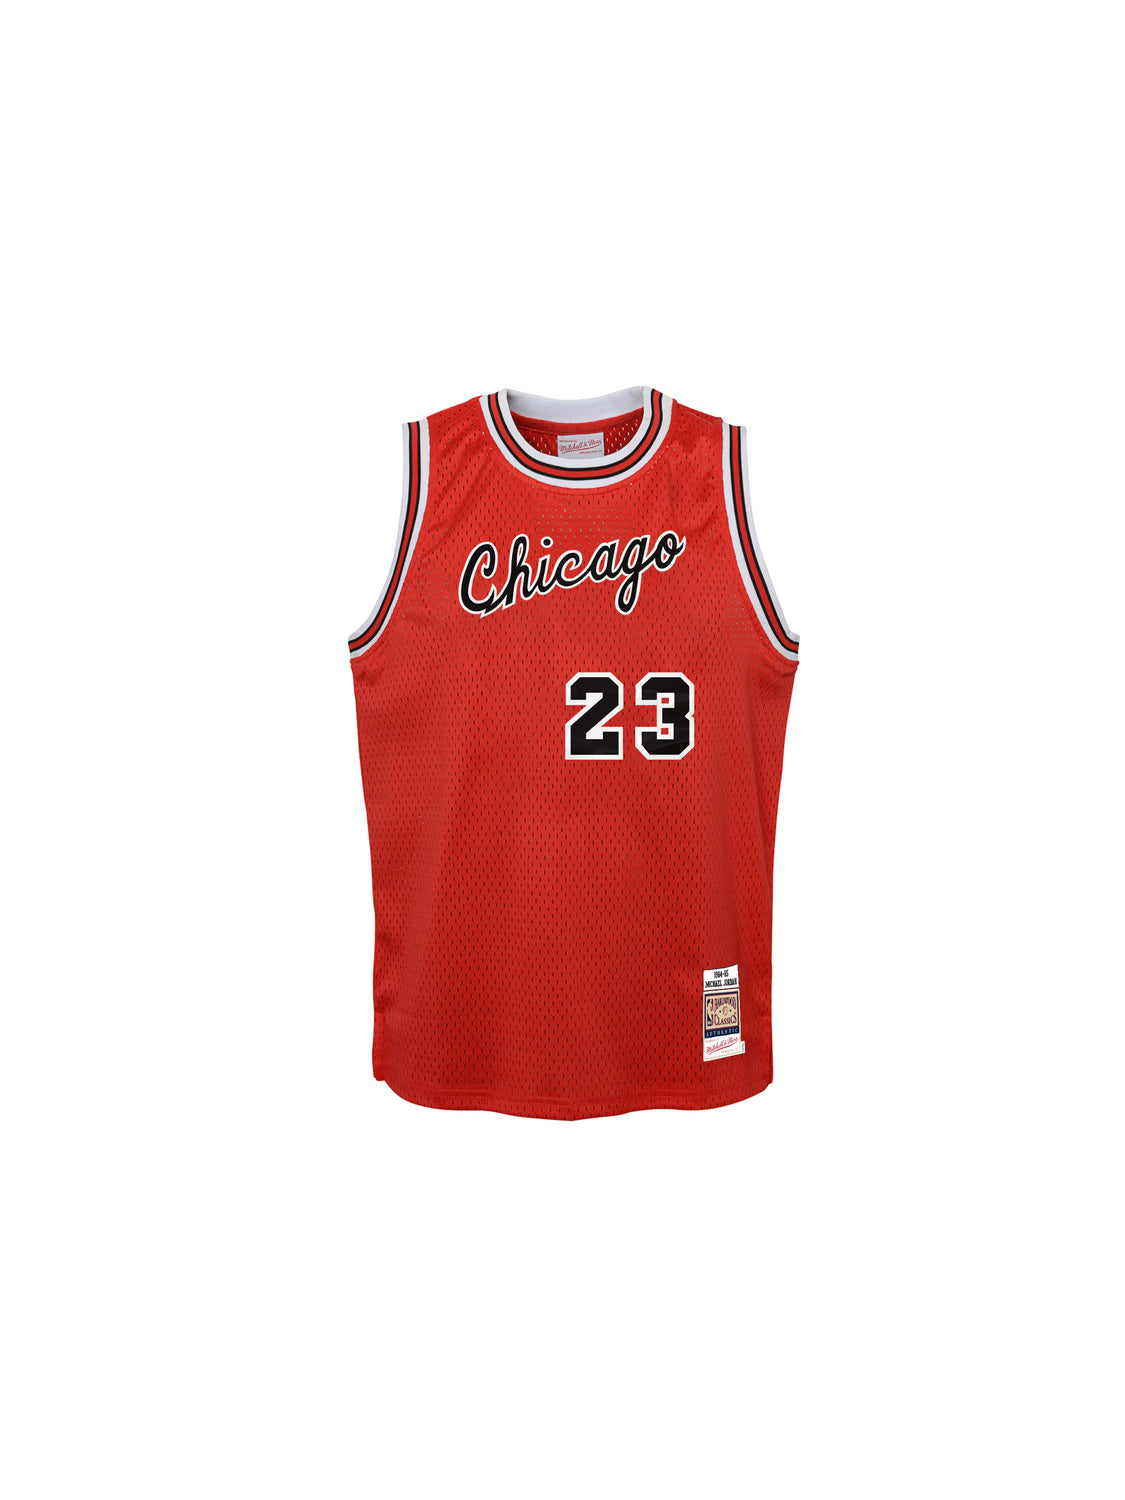 Michael Jordan Chicago Bulls Mitchell & Ness Youth 1984-85 Hardwood  Classics Authentic Jersey - Red